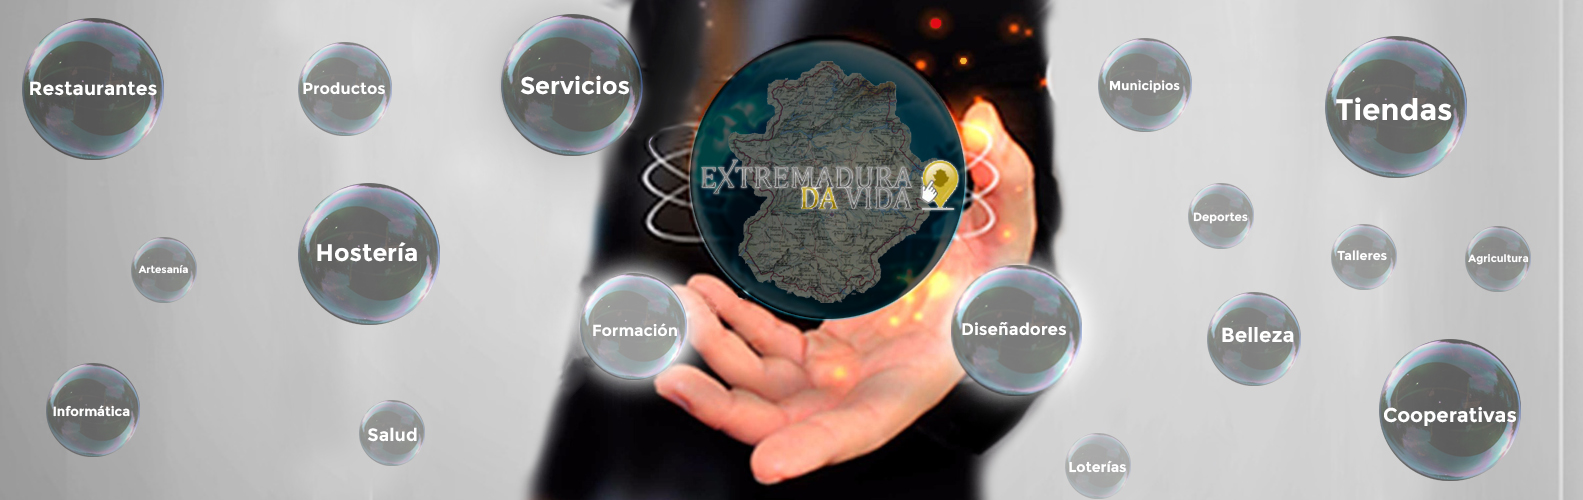 Extremadura Empresas españolas España da vida Plataforma